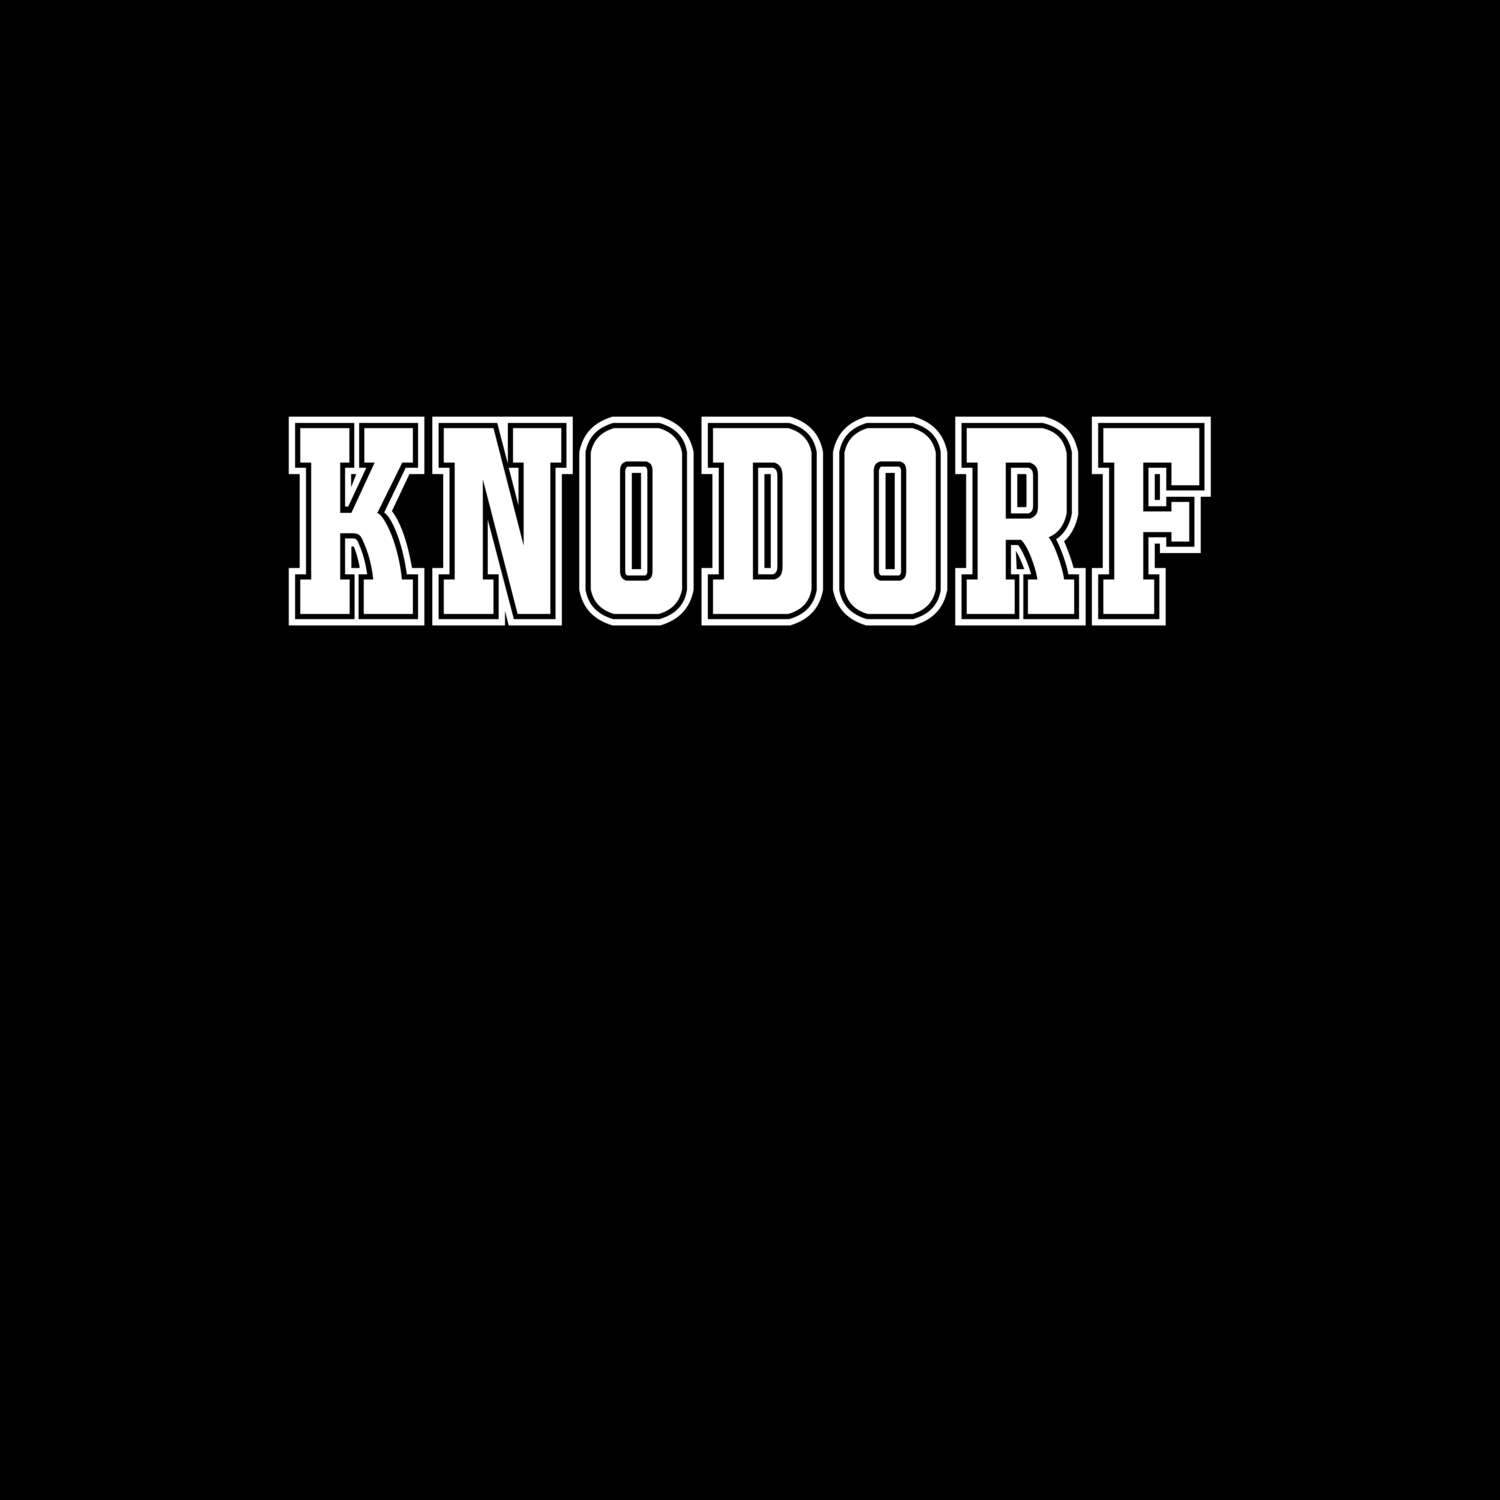 Knodorf T-Shirt »Classic«